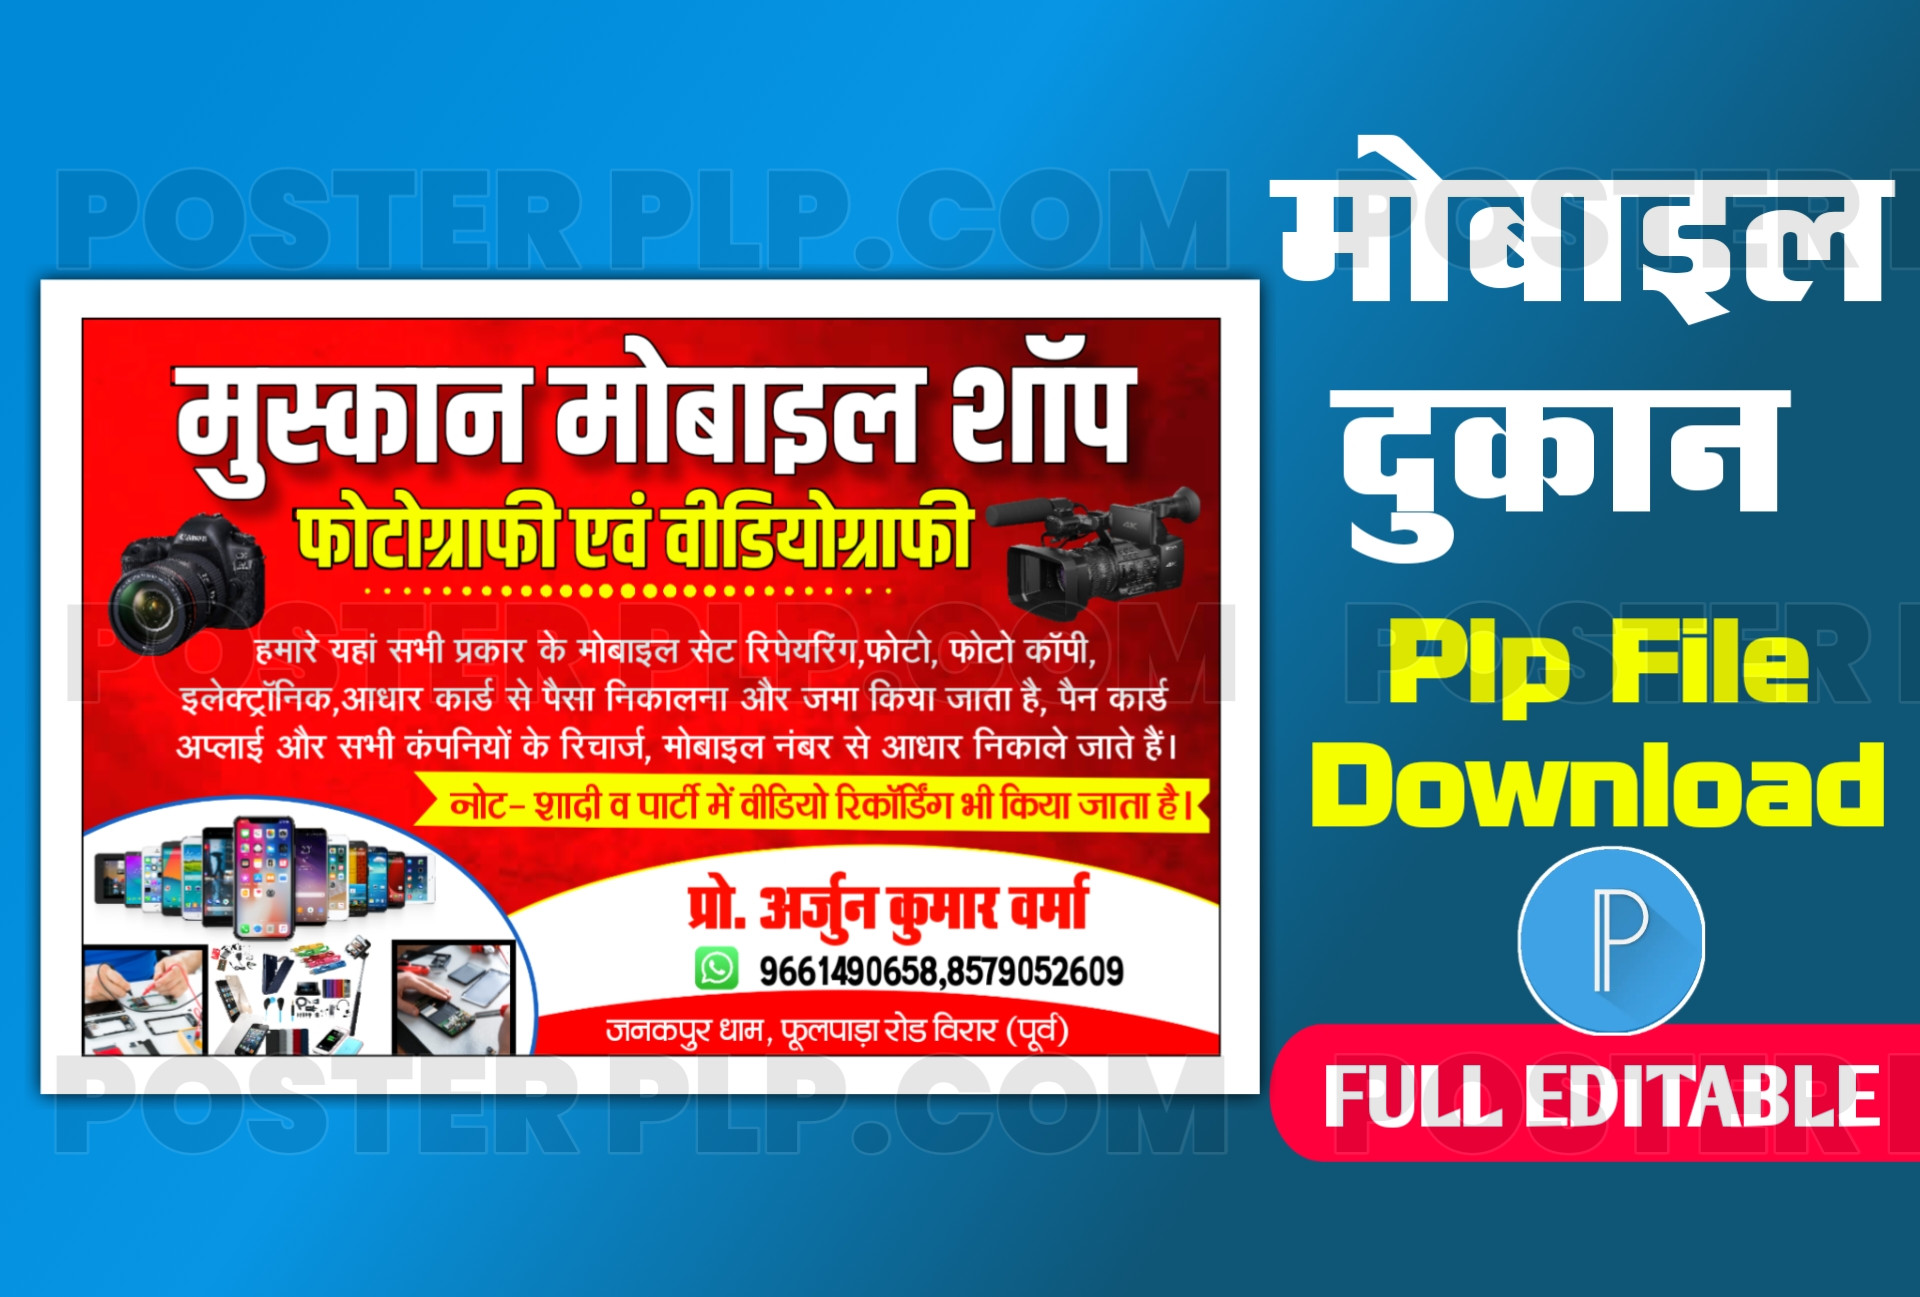 Mobile shop plp file download| Mobile shop banner editing